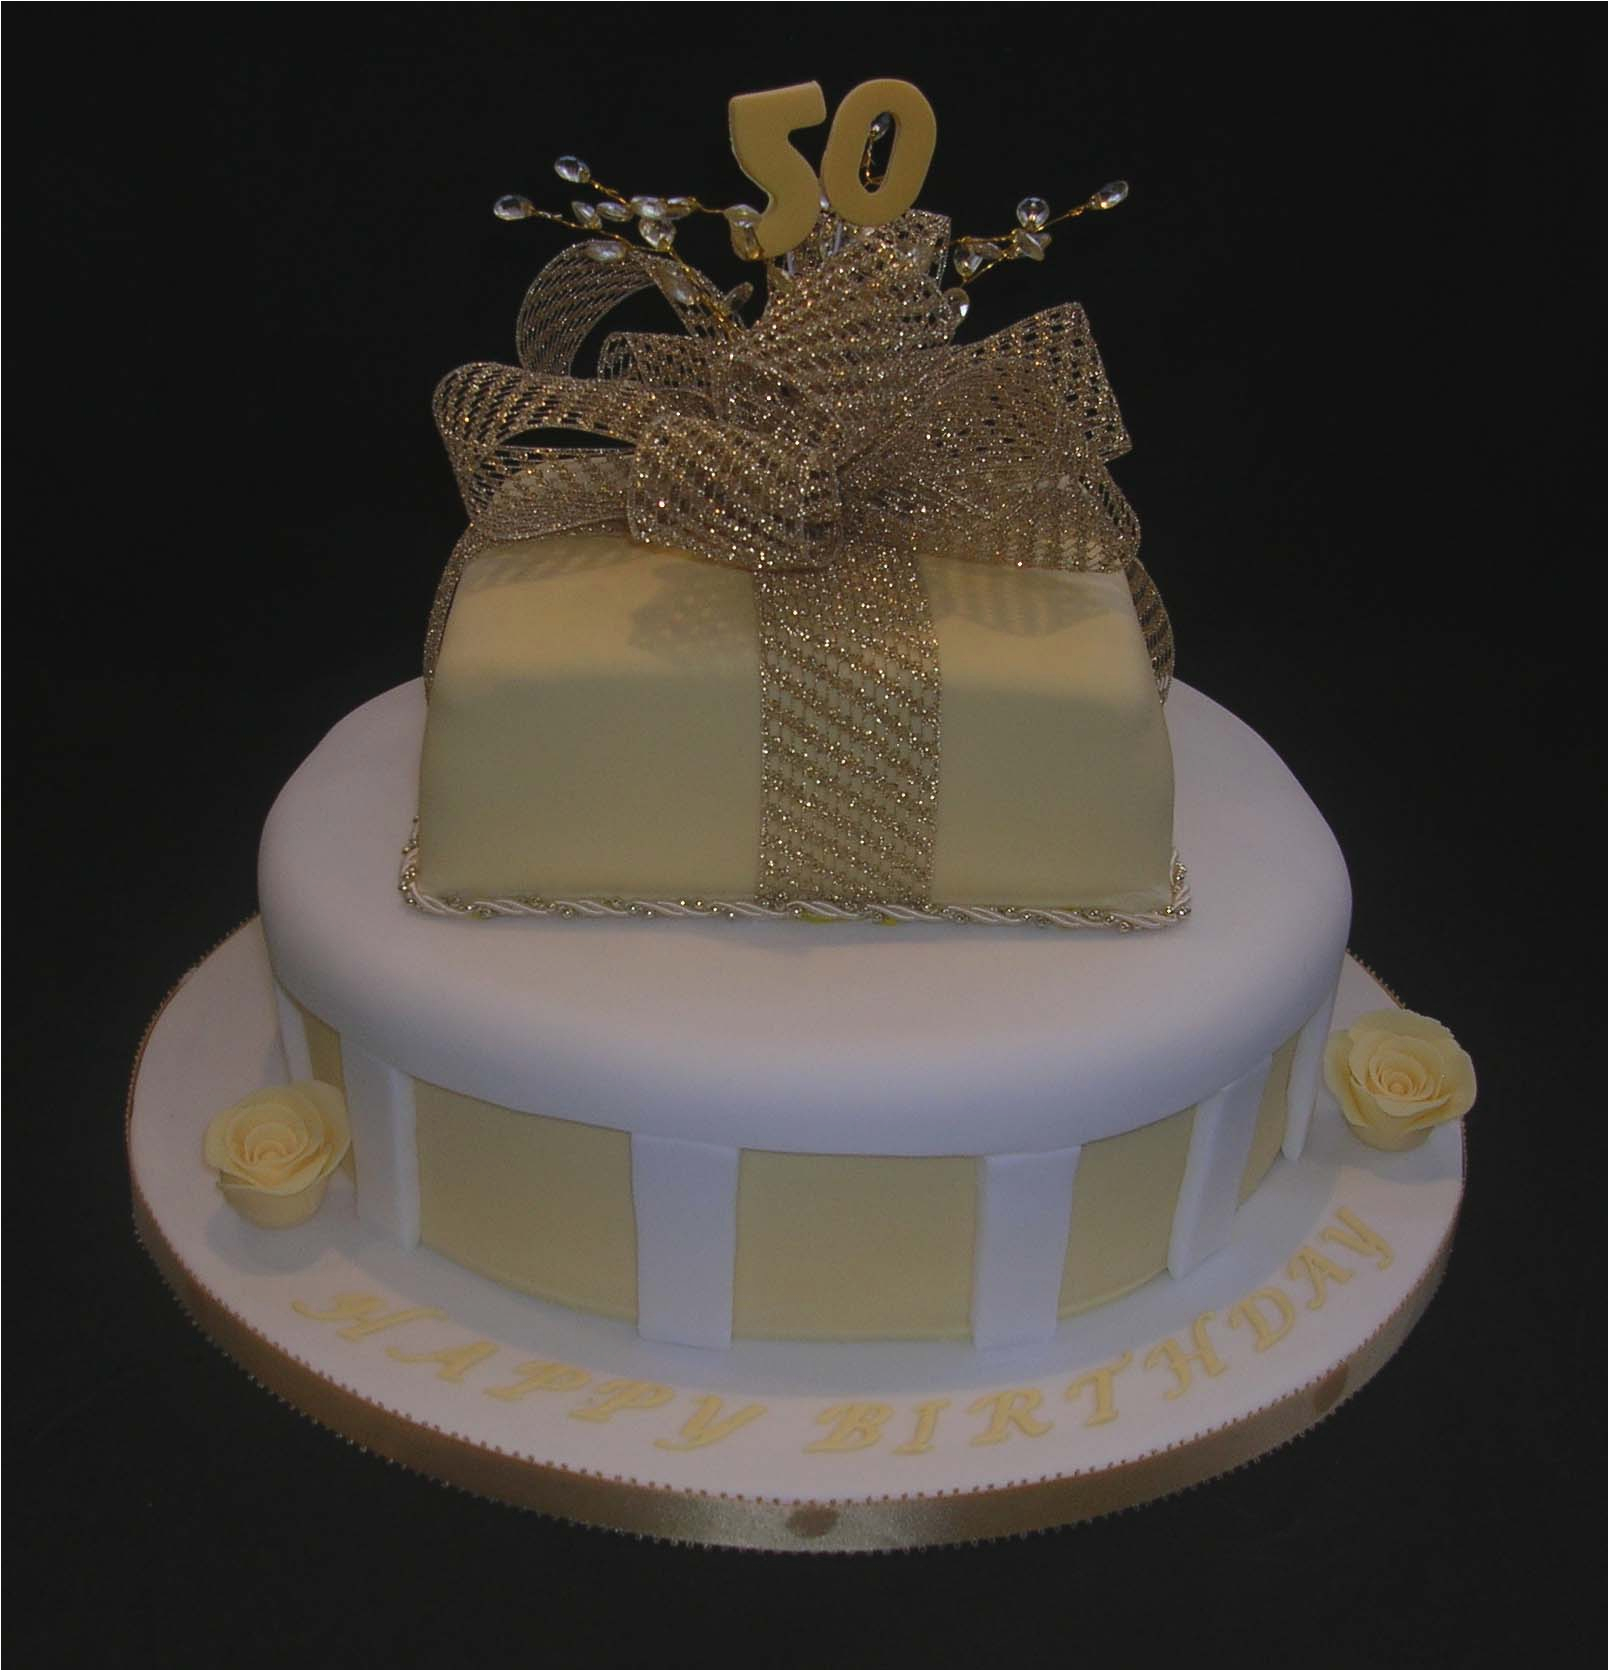 Cake Decorations for 50th Birthday Birthday Cakes Walah Walah